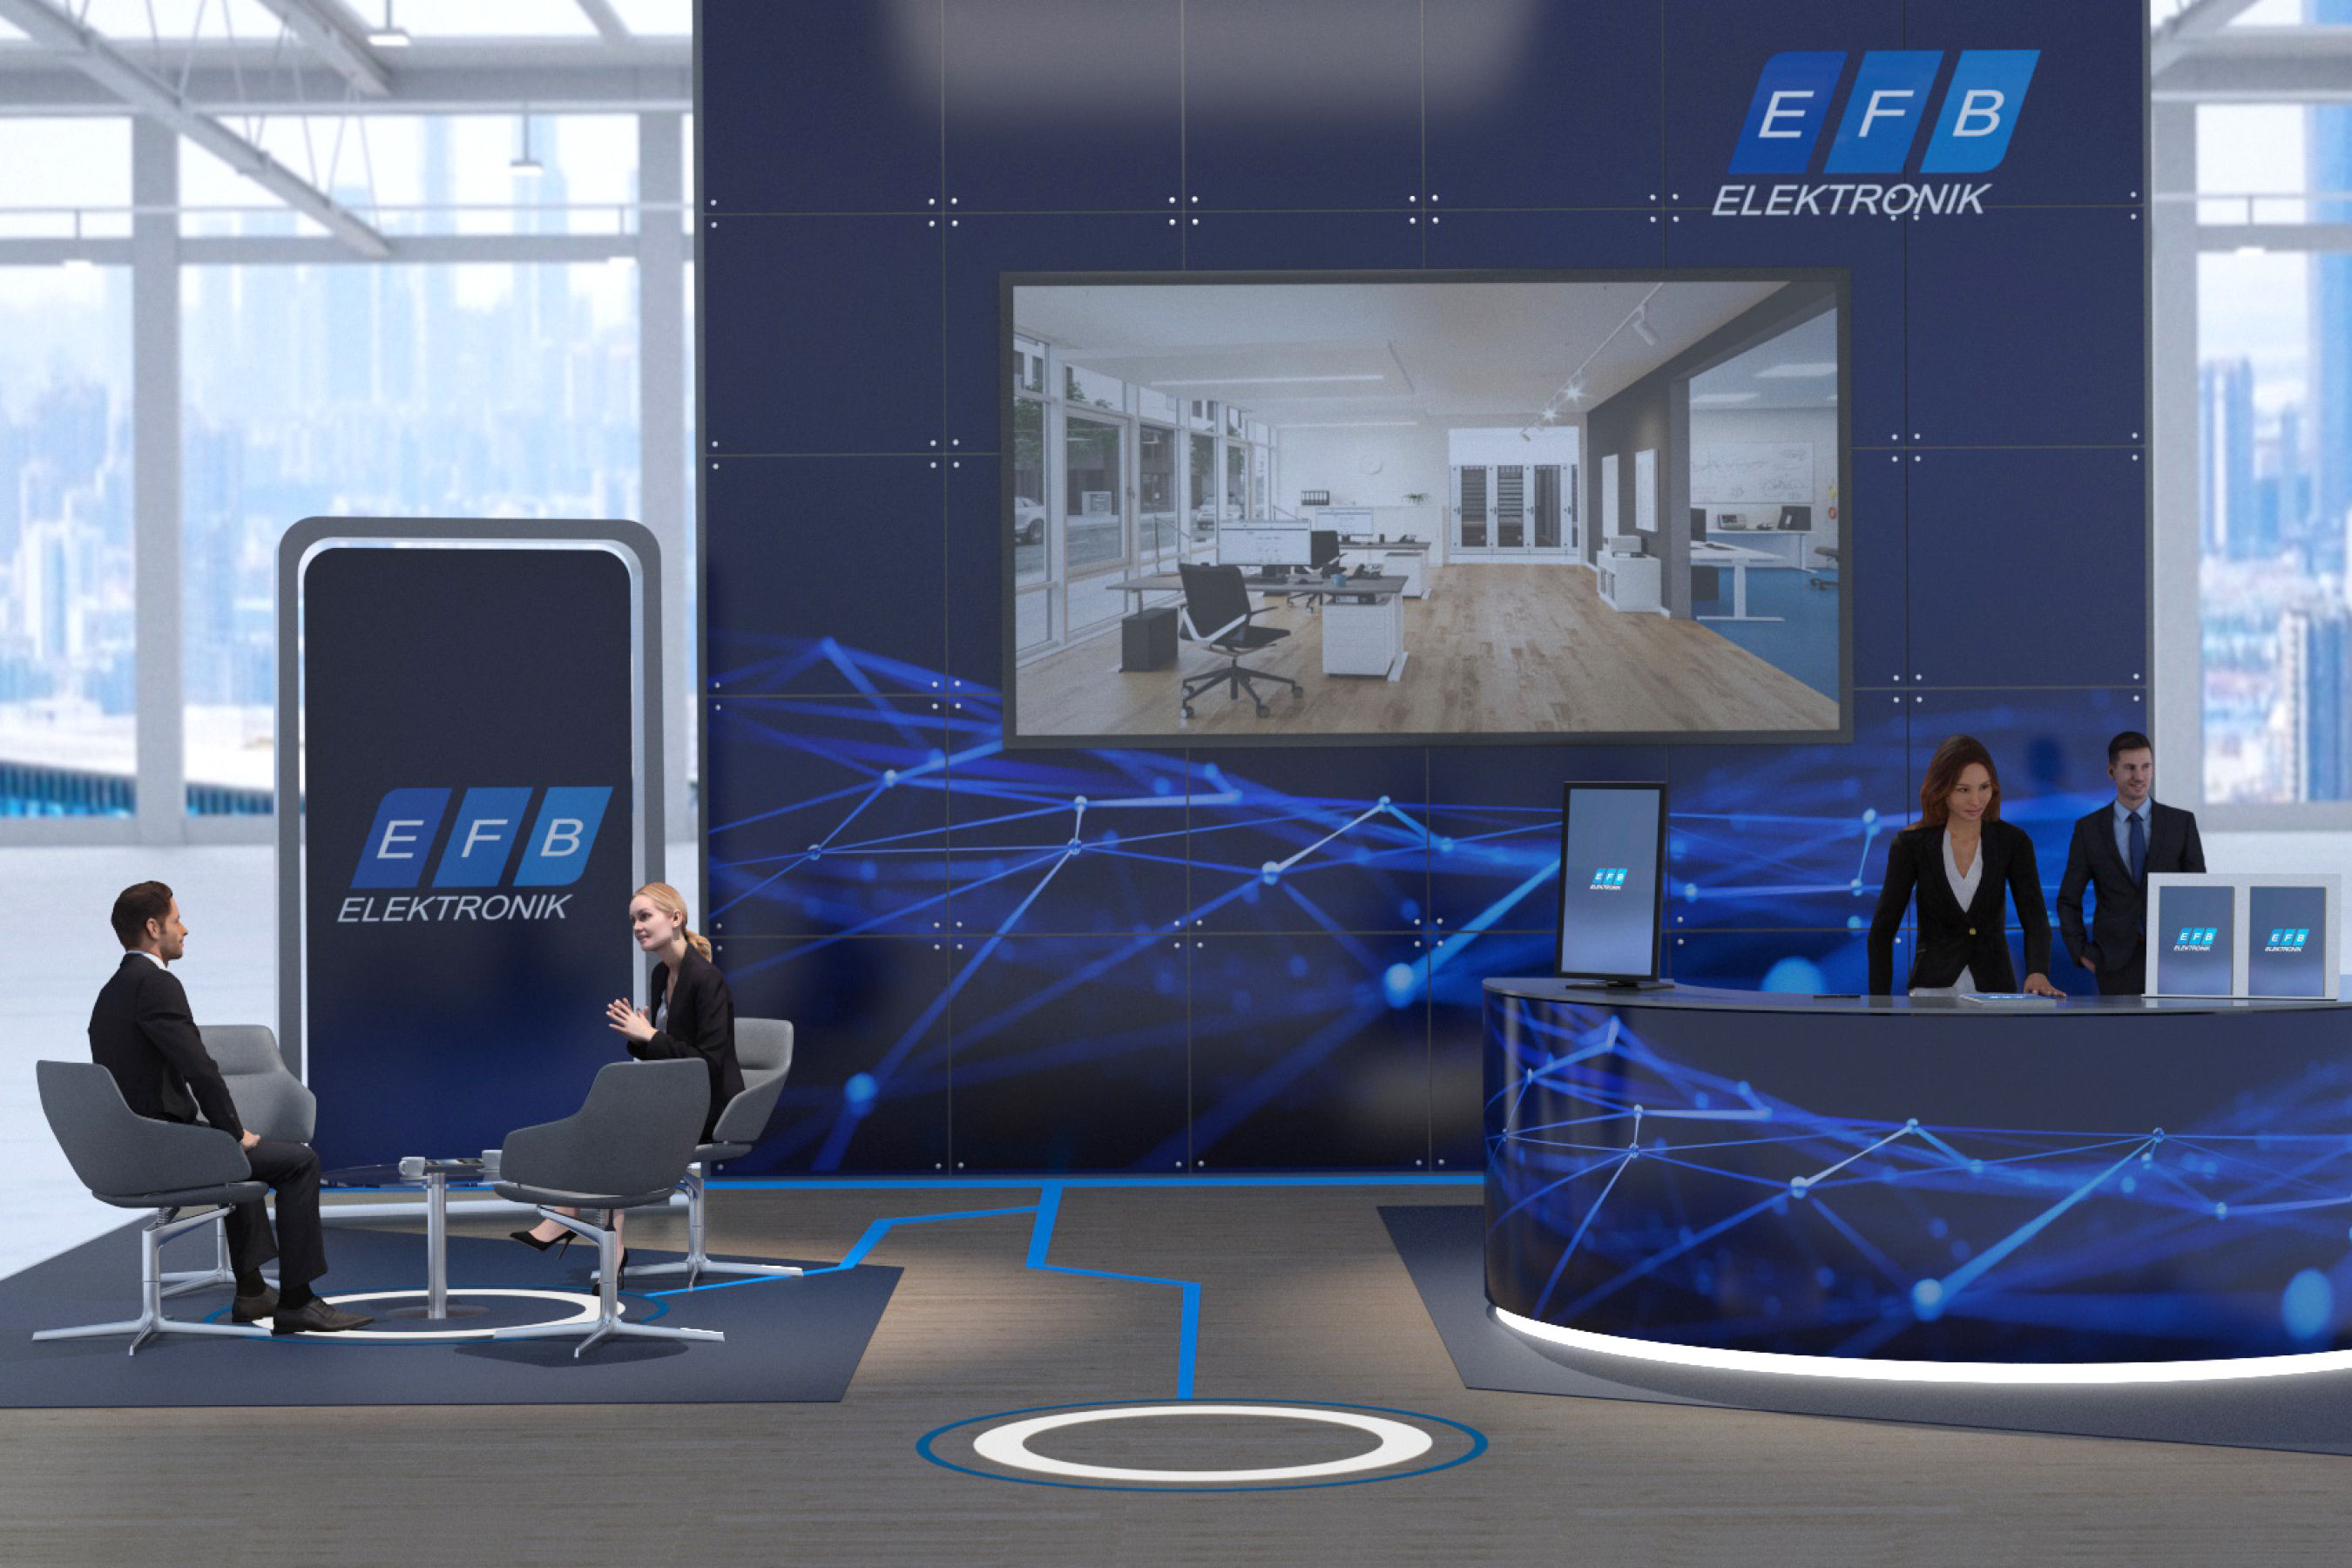 EFB-Elektronik exhibition stand